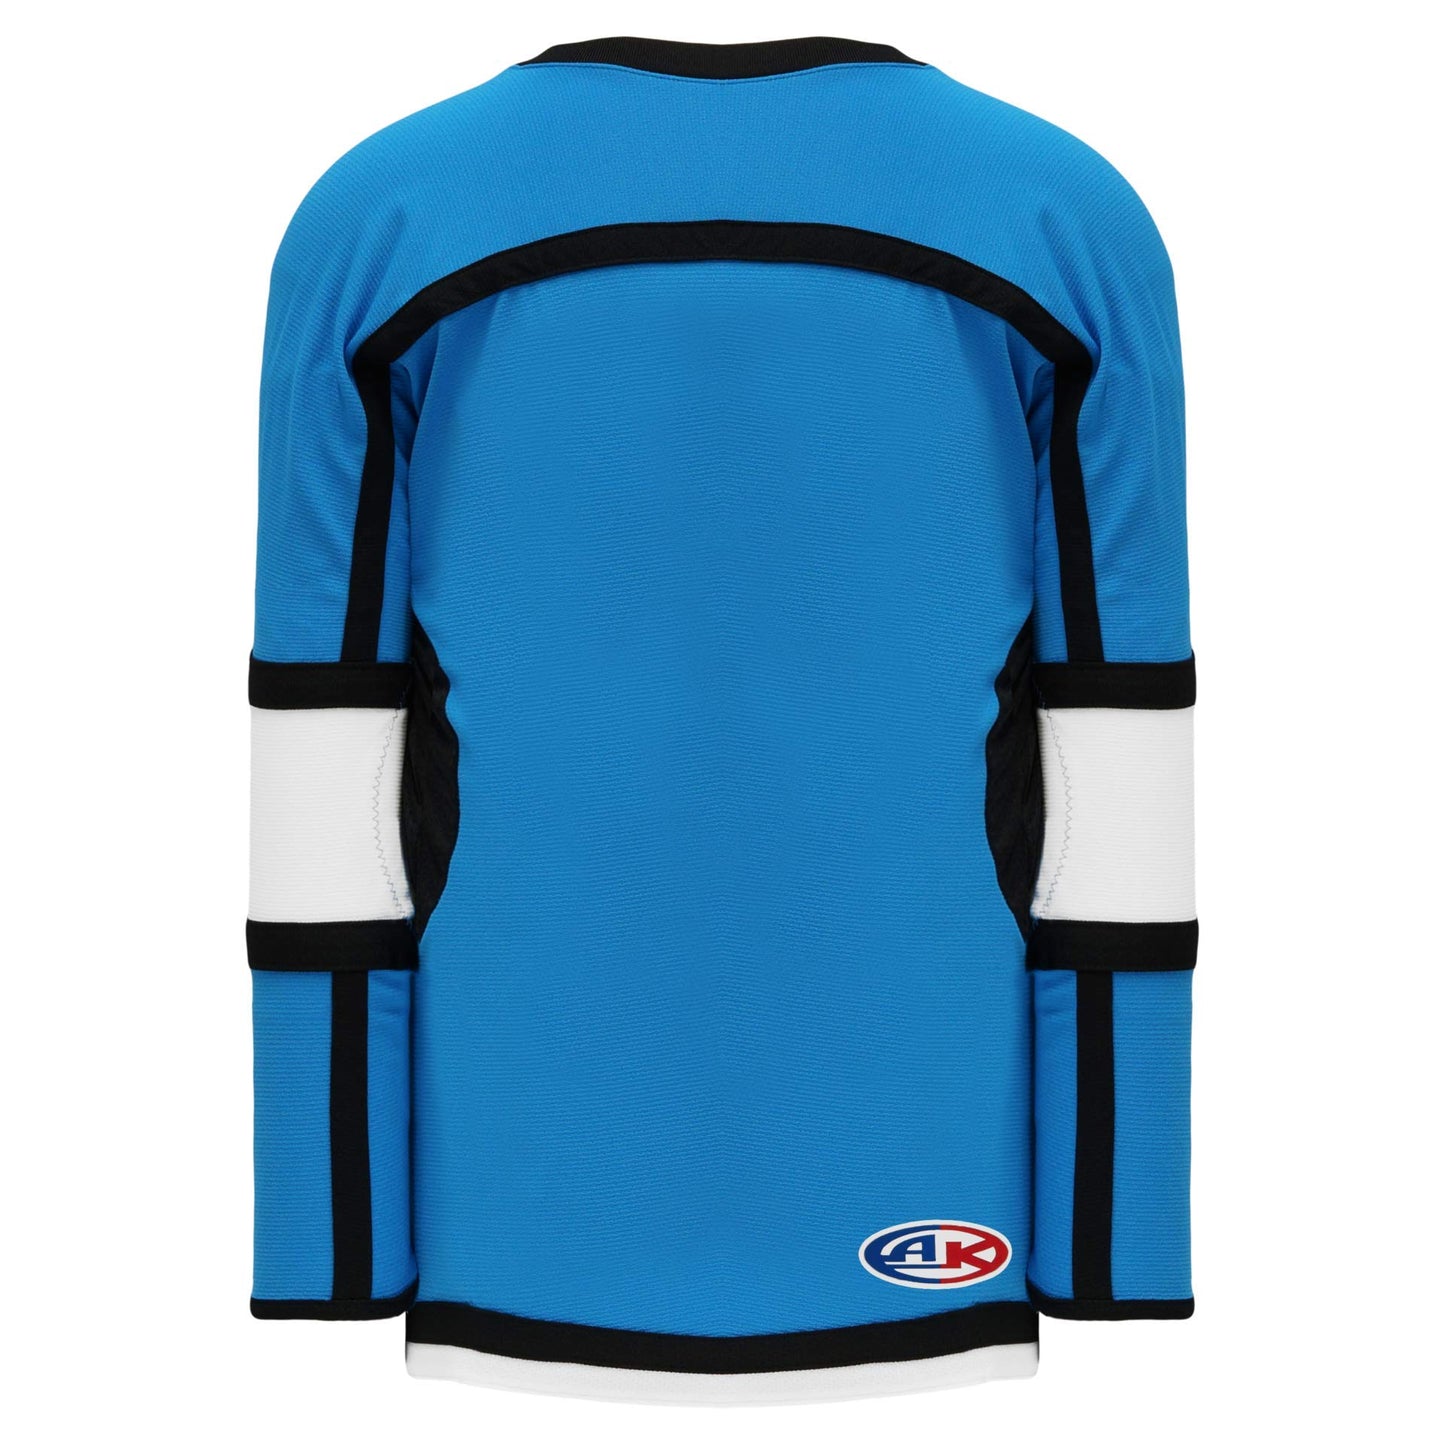 Custom Pro Blue, Black, White Durastar Mesh  hockey jerseys no minimum